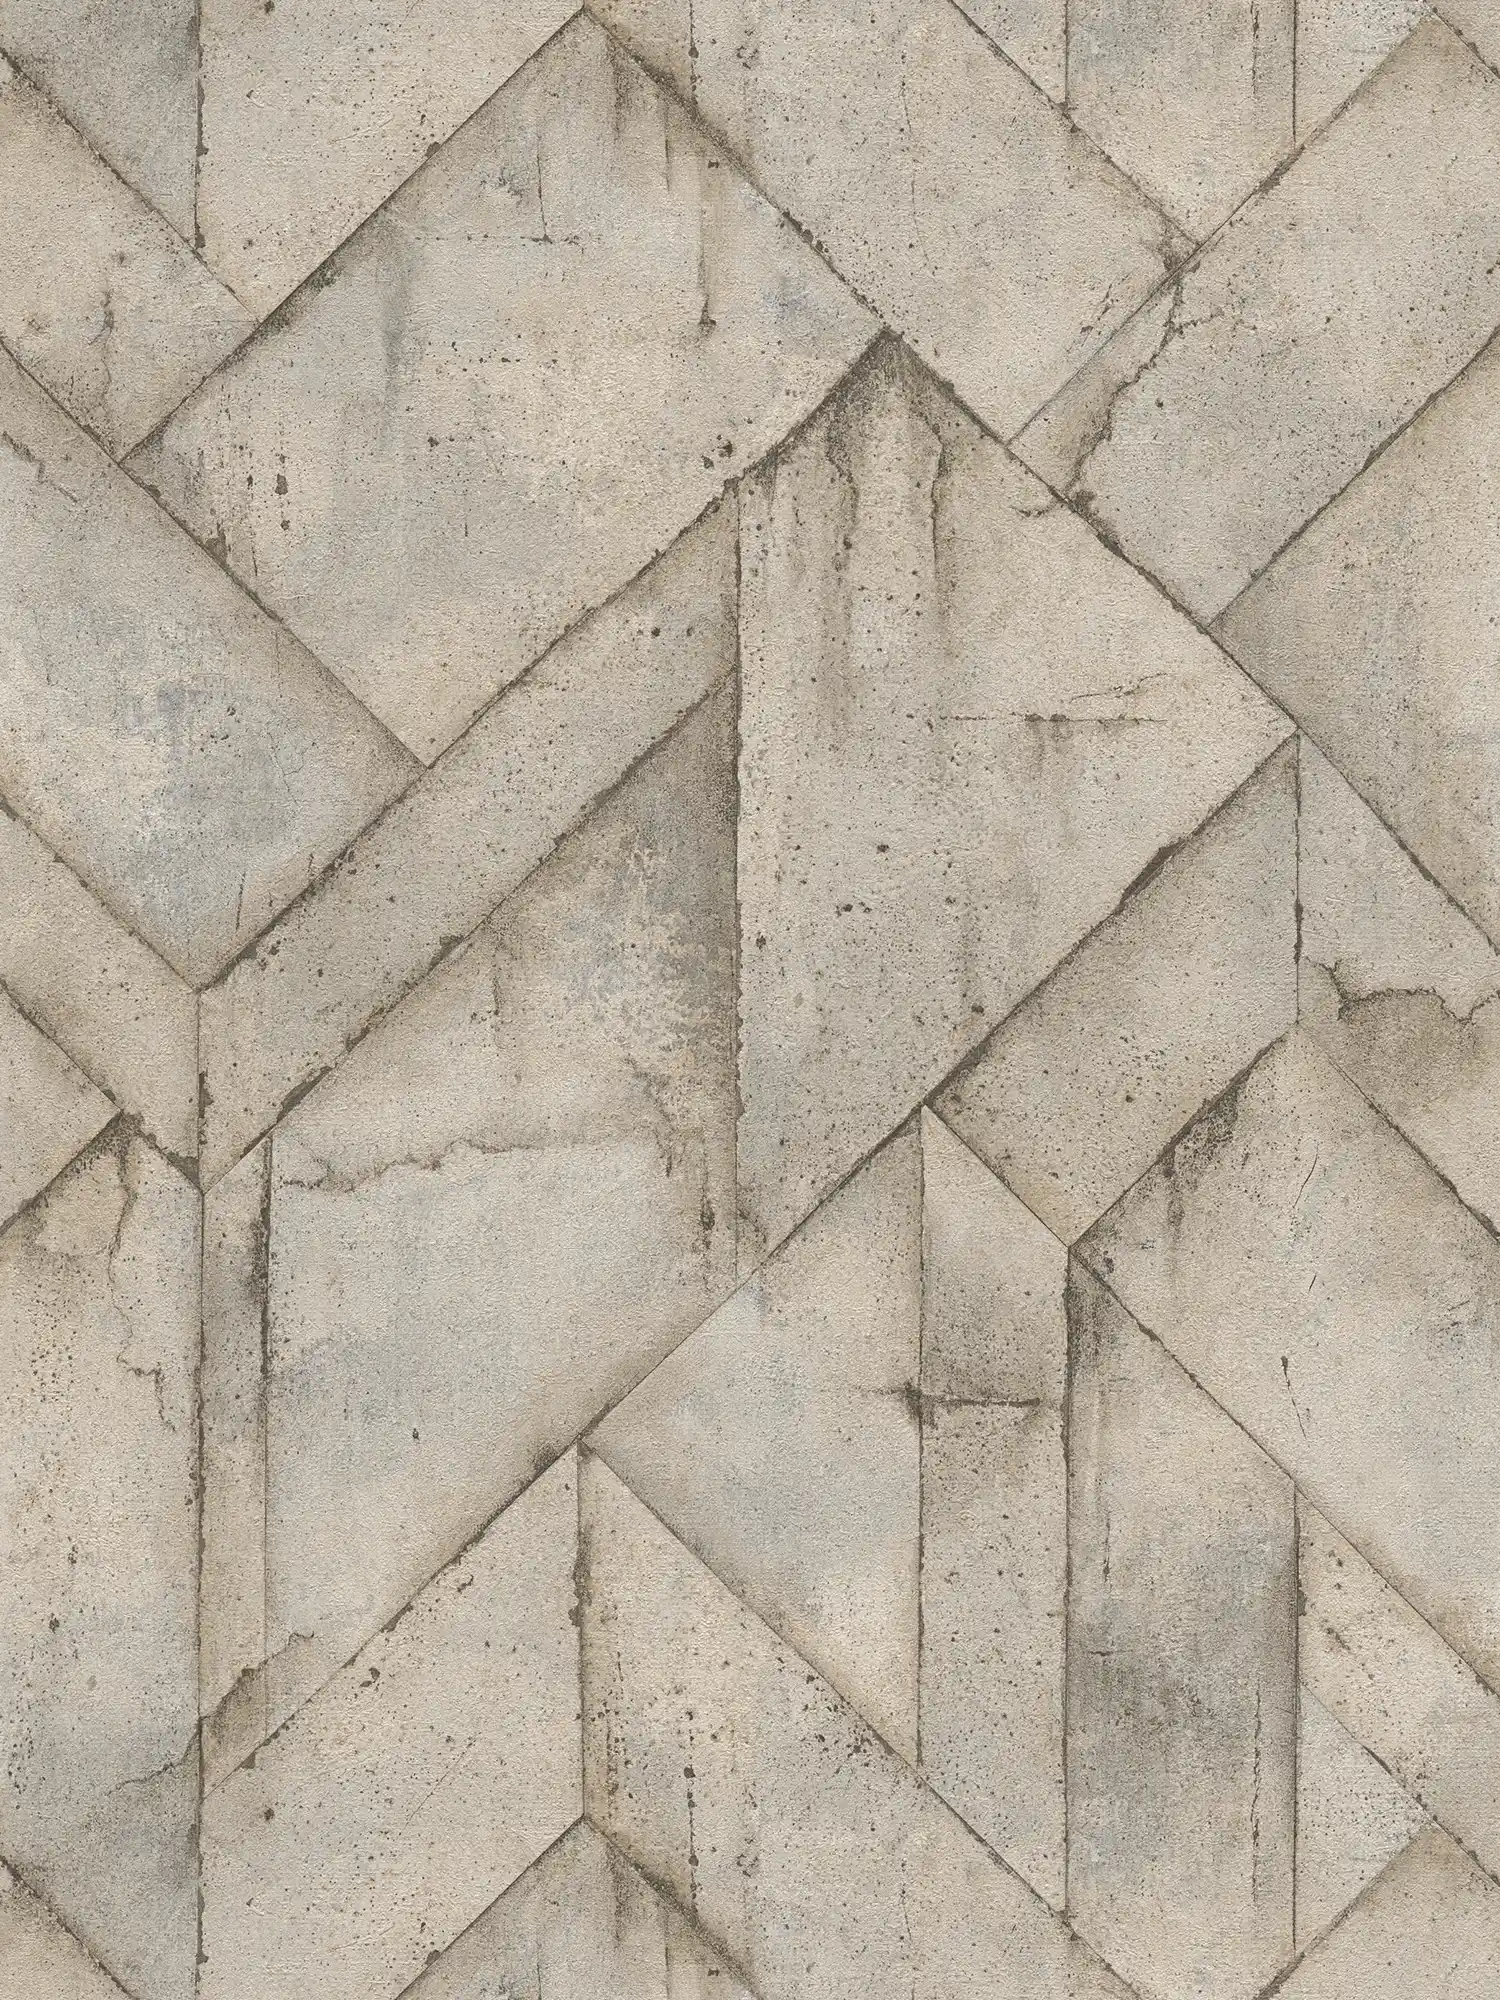 Concrete look wallpaper rustic & geometric design - beige, brown, grey
